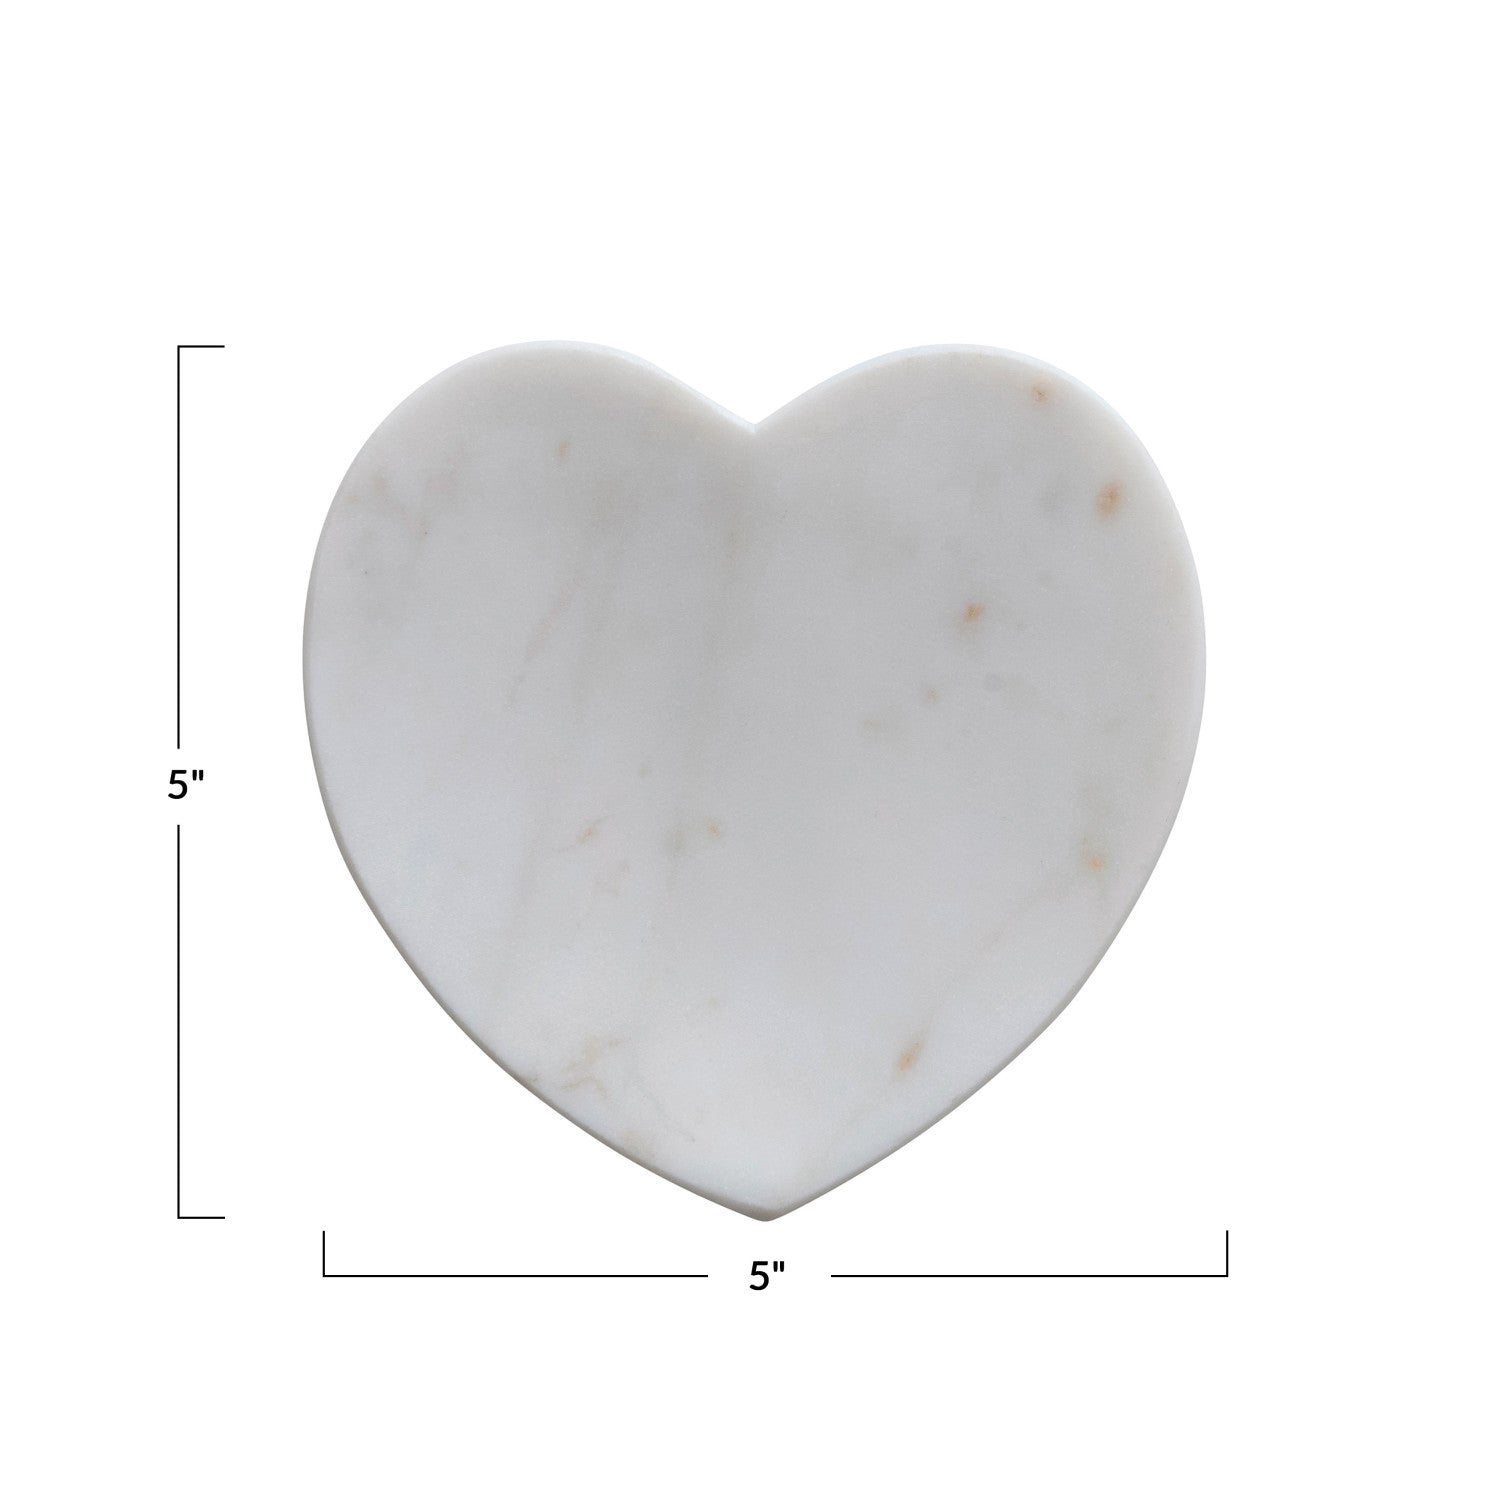 Heart Shaped Marble Dish